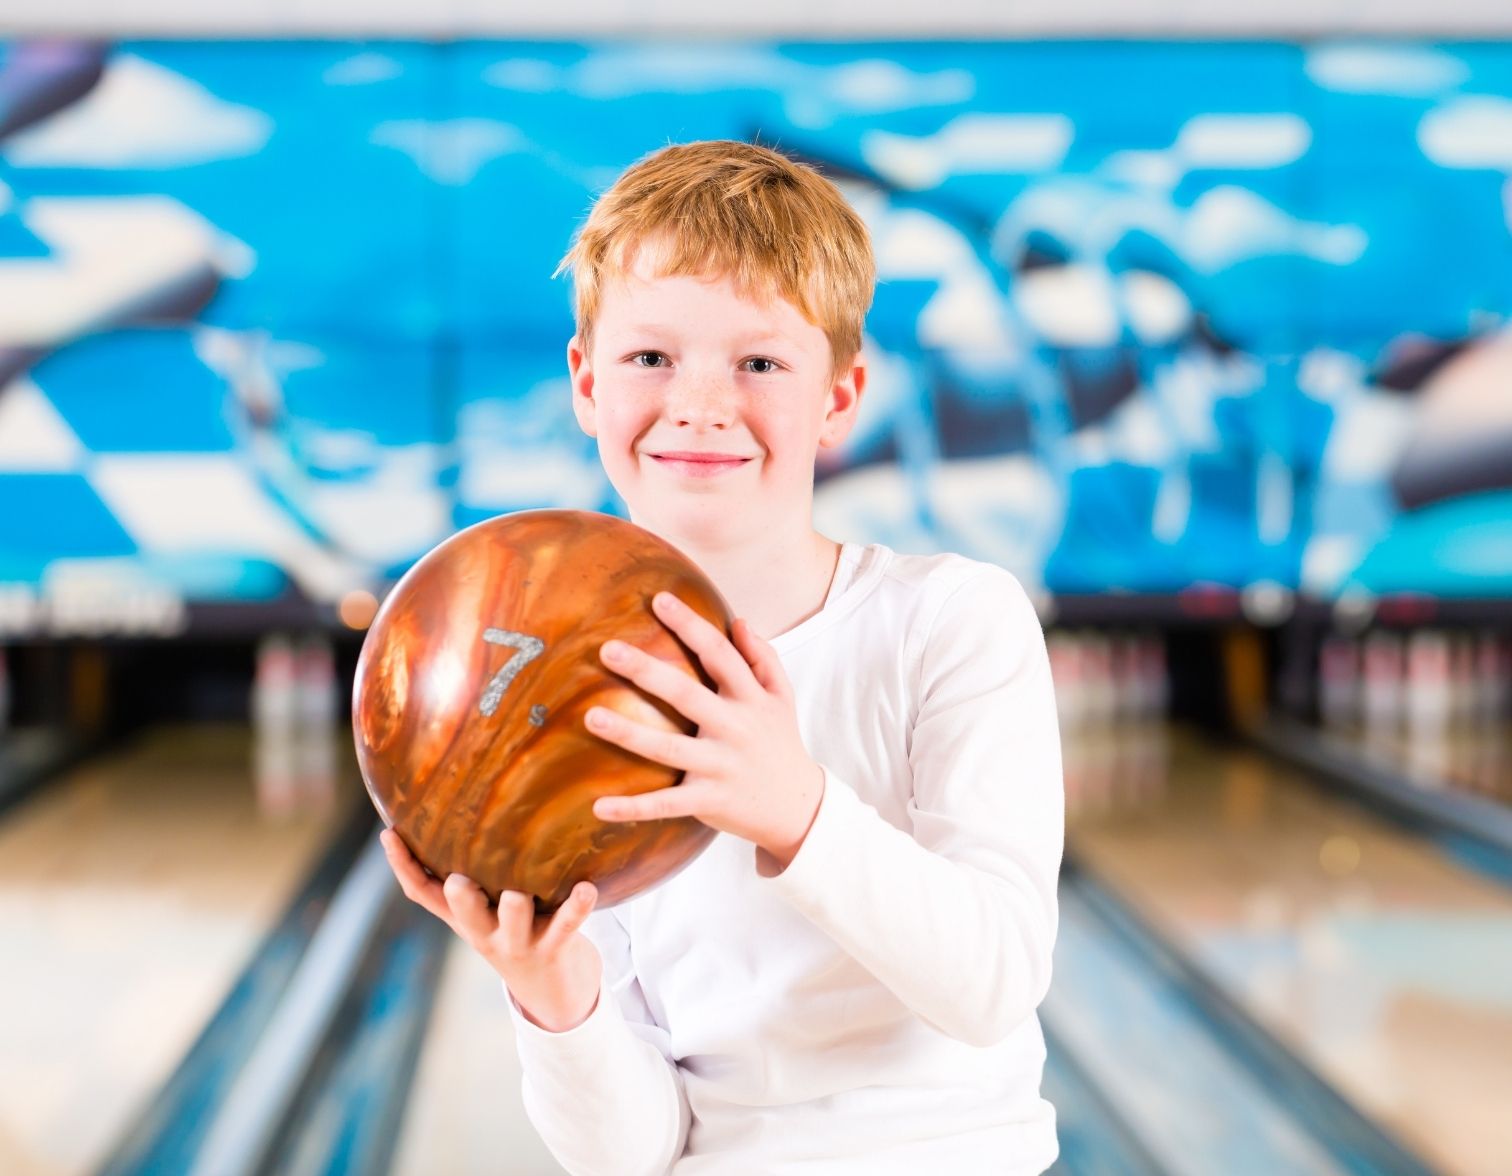 boy at bowling alley holding orange bowling ball.